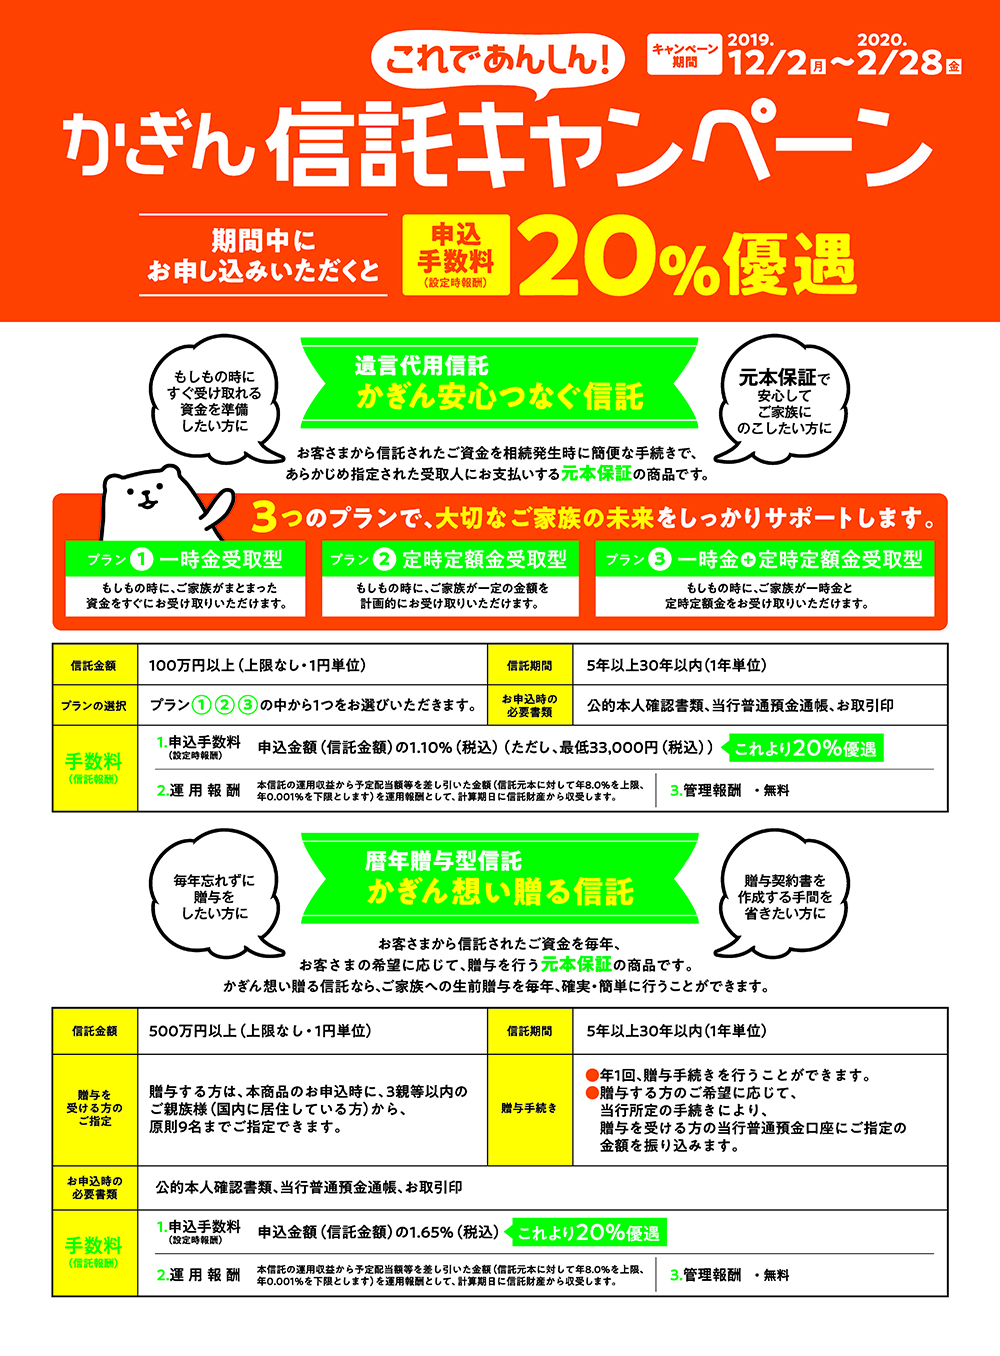 sintaku_campaign_20191202-2.jpg